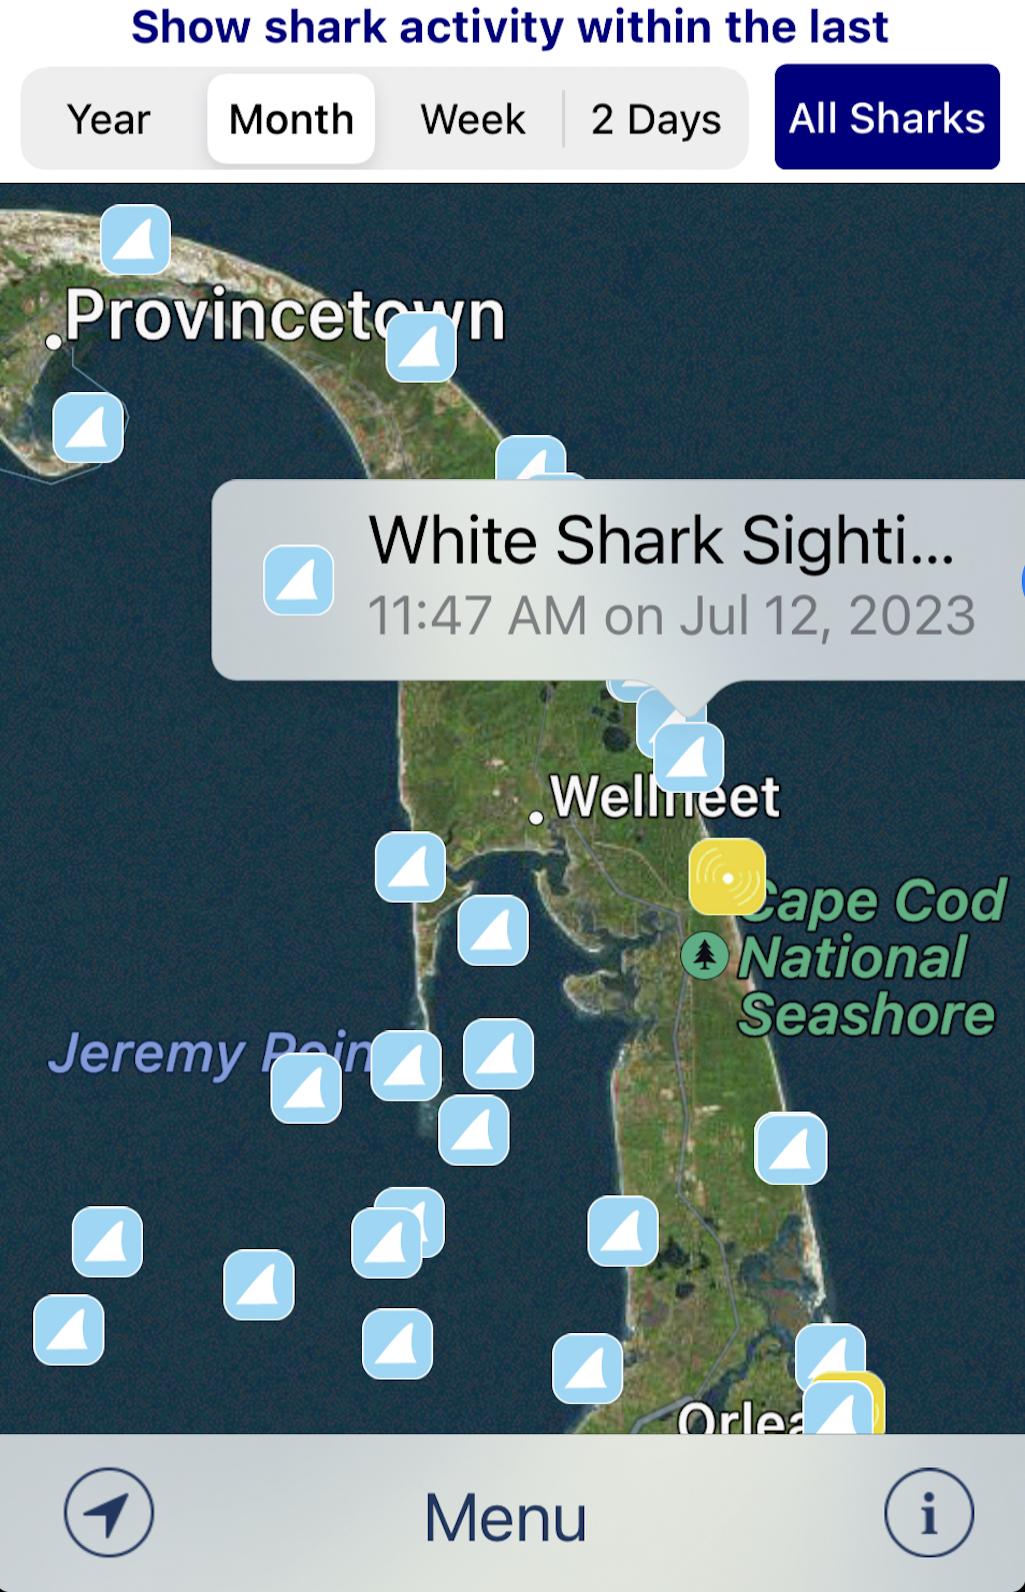 Recent shark activity around Cape Cod/Sharktivity app